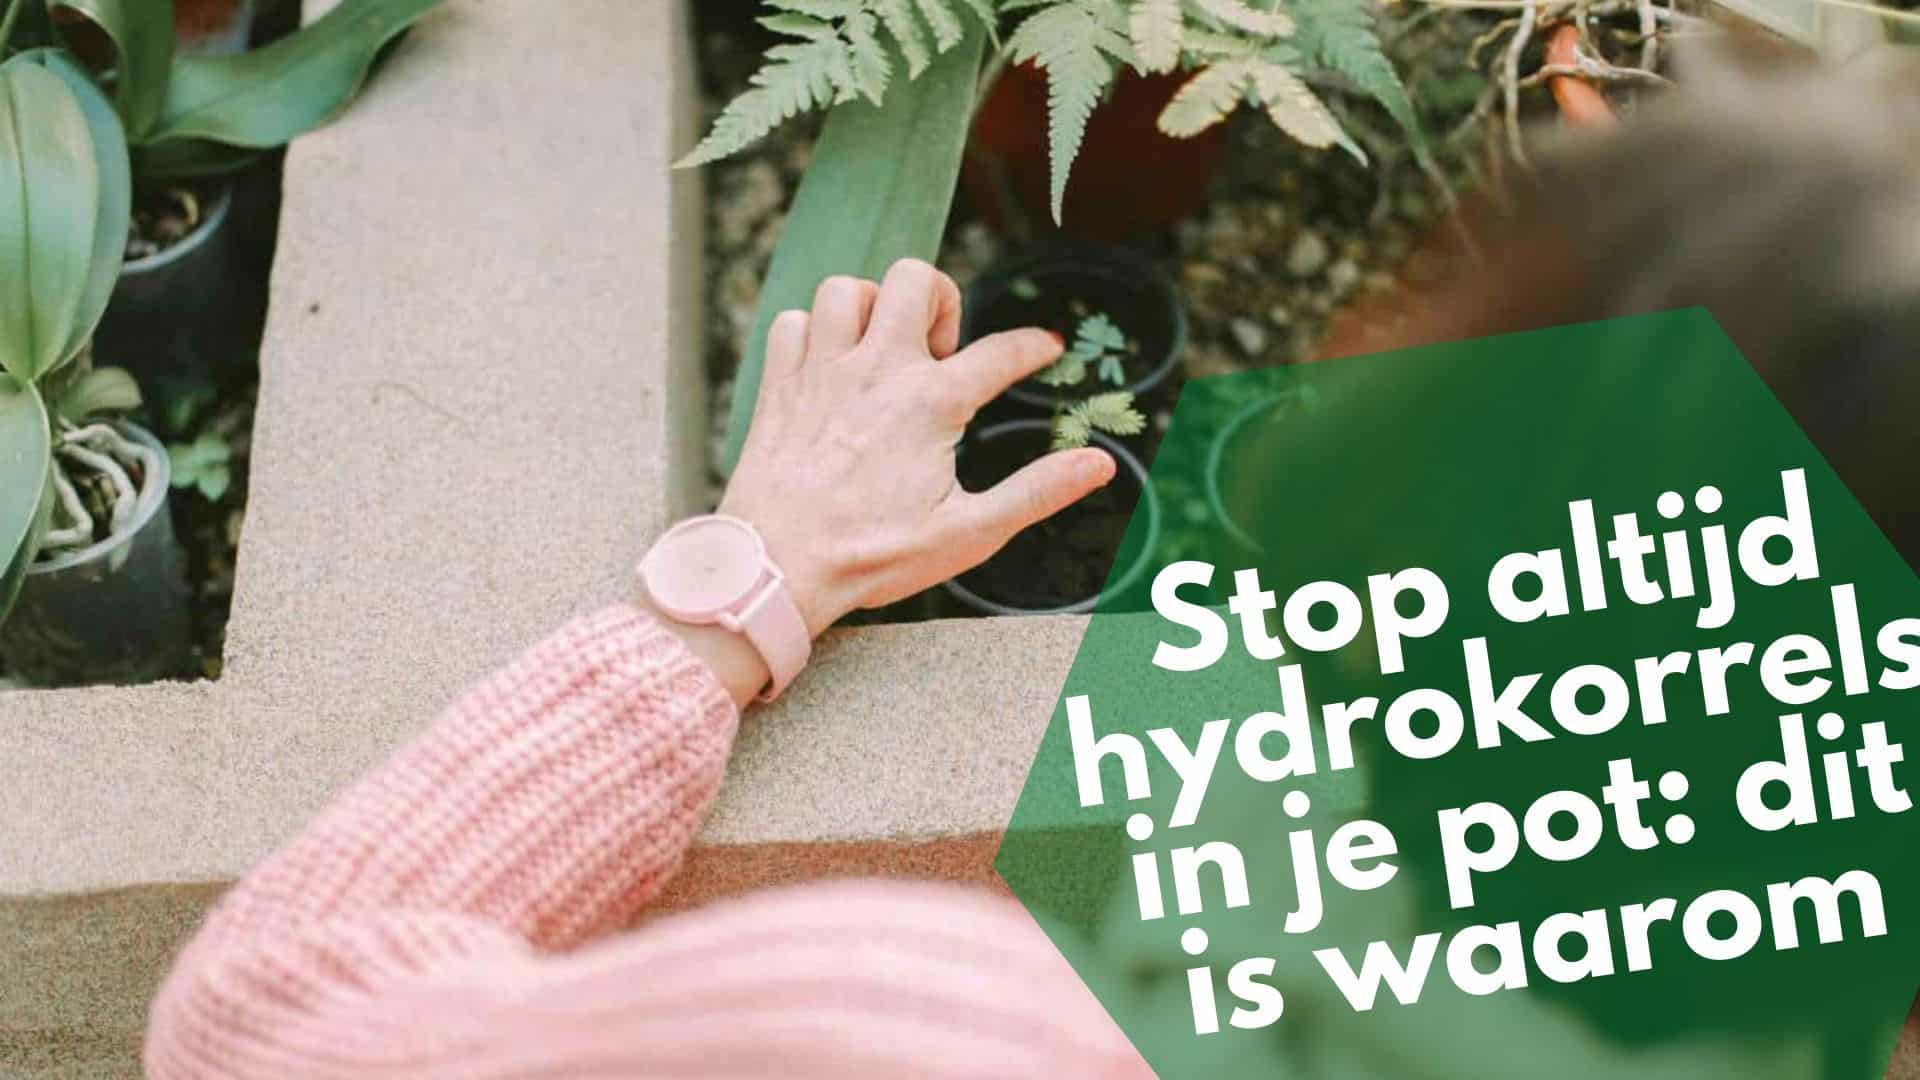 Stop altijd hydrokorrels in je pot